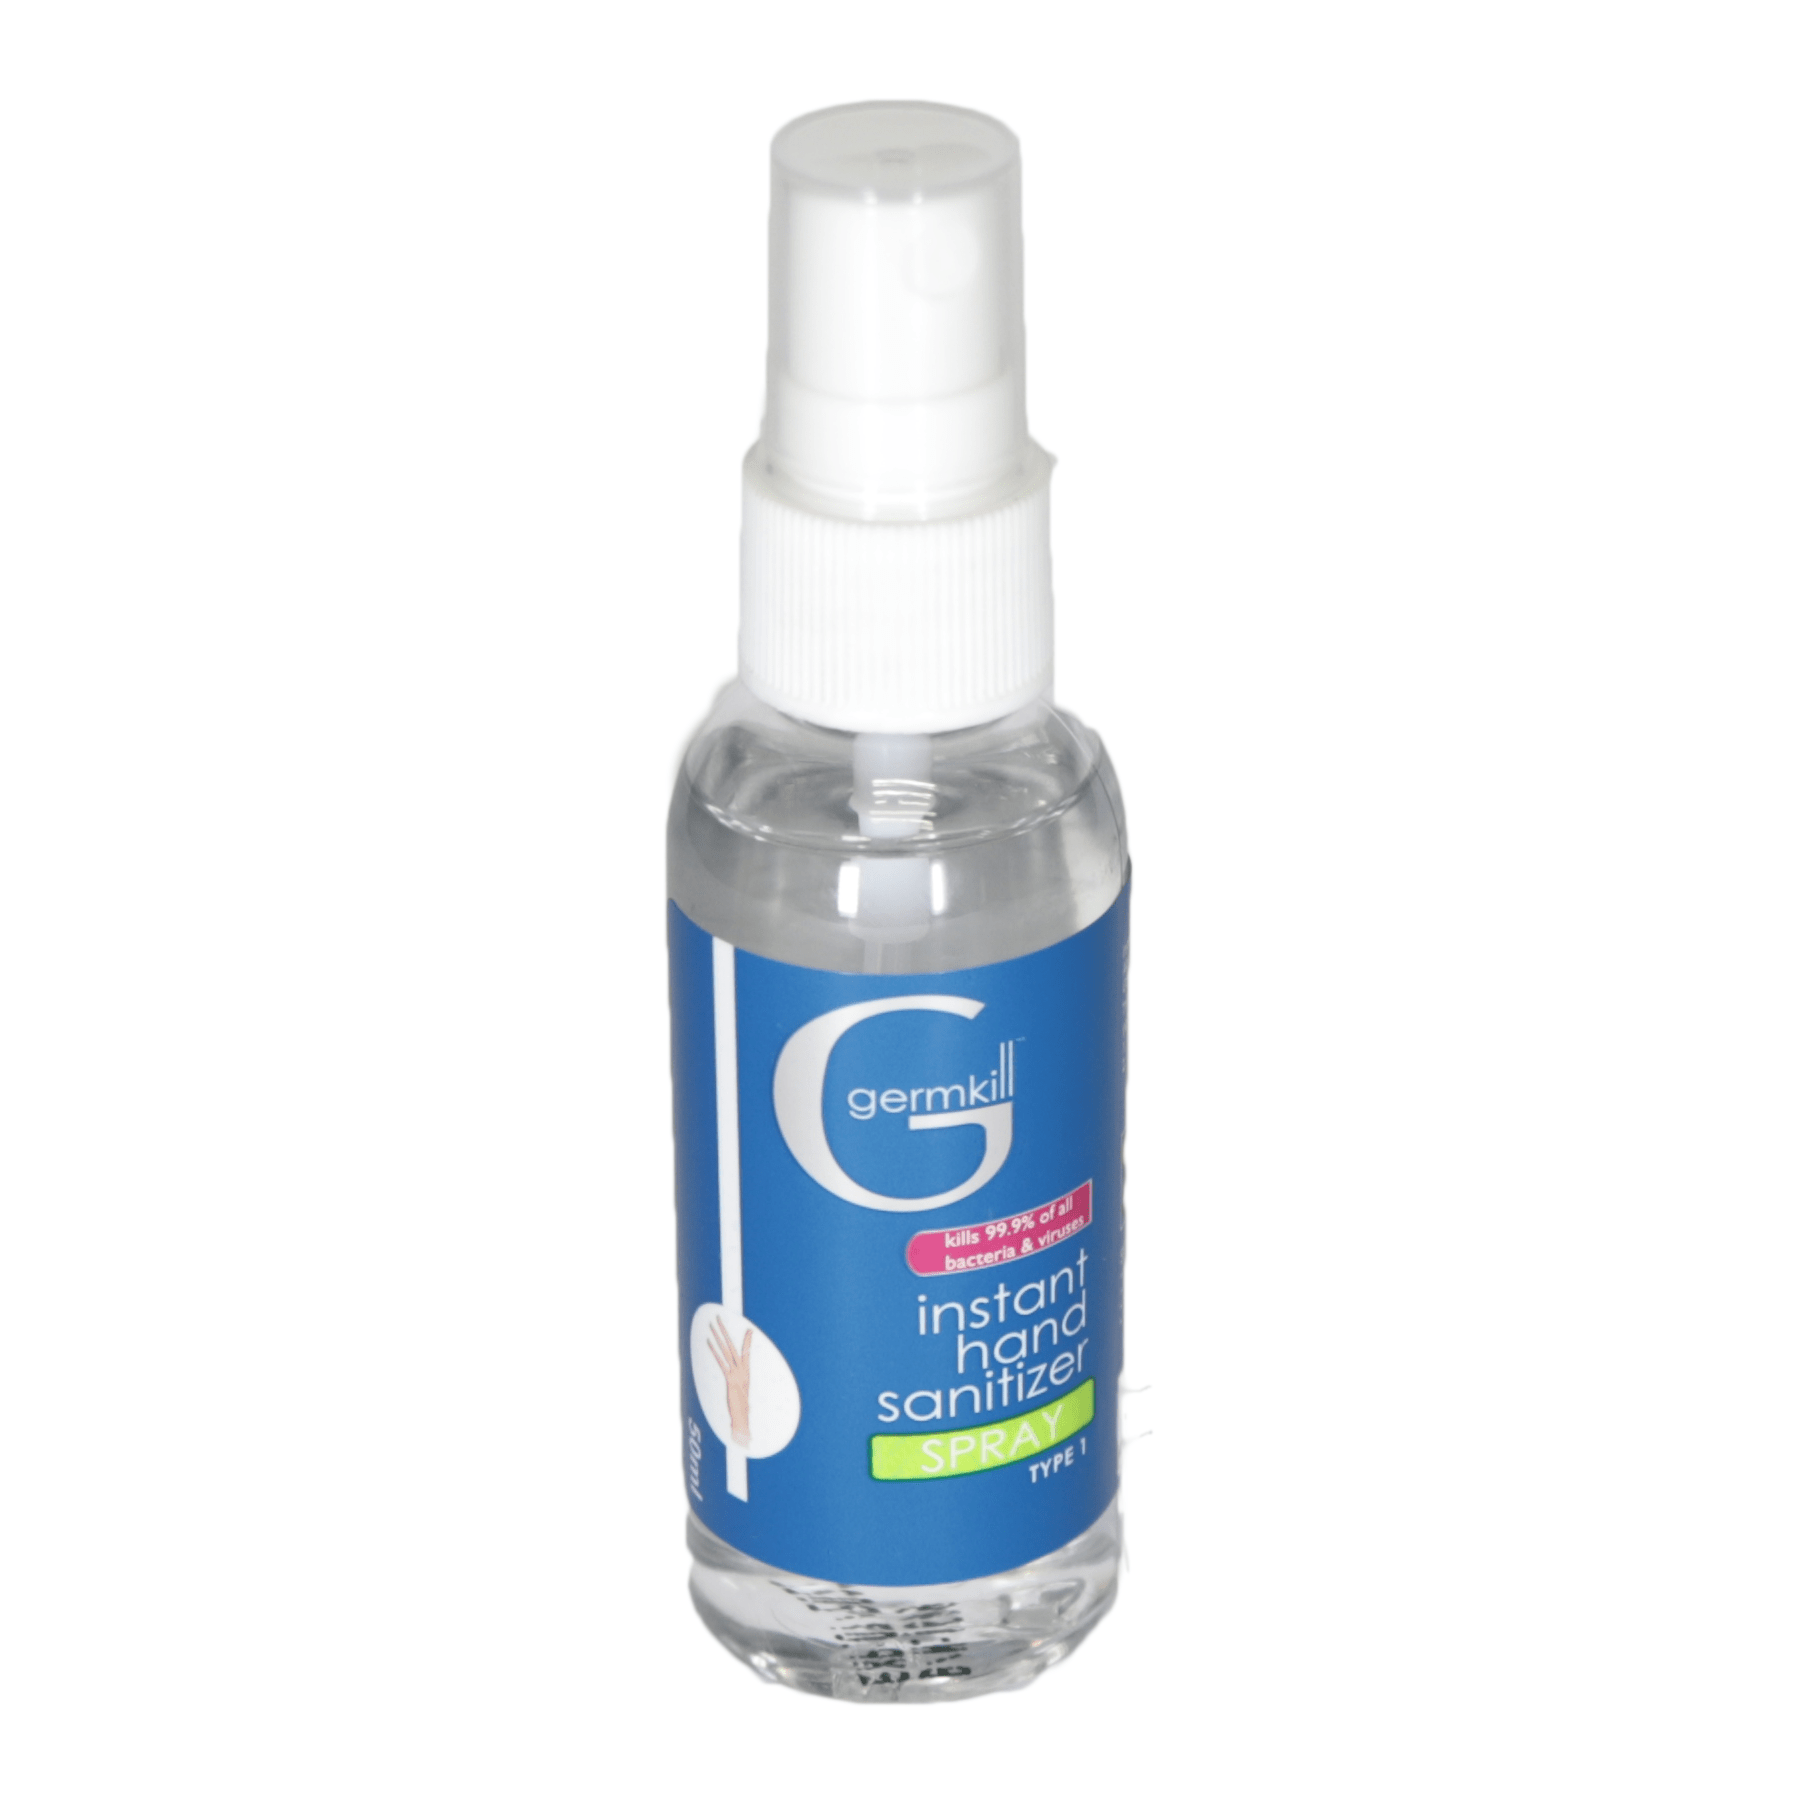 Germkill Instant Hand Sanitizer - Liquid 50ml - Omninela Medical